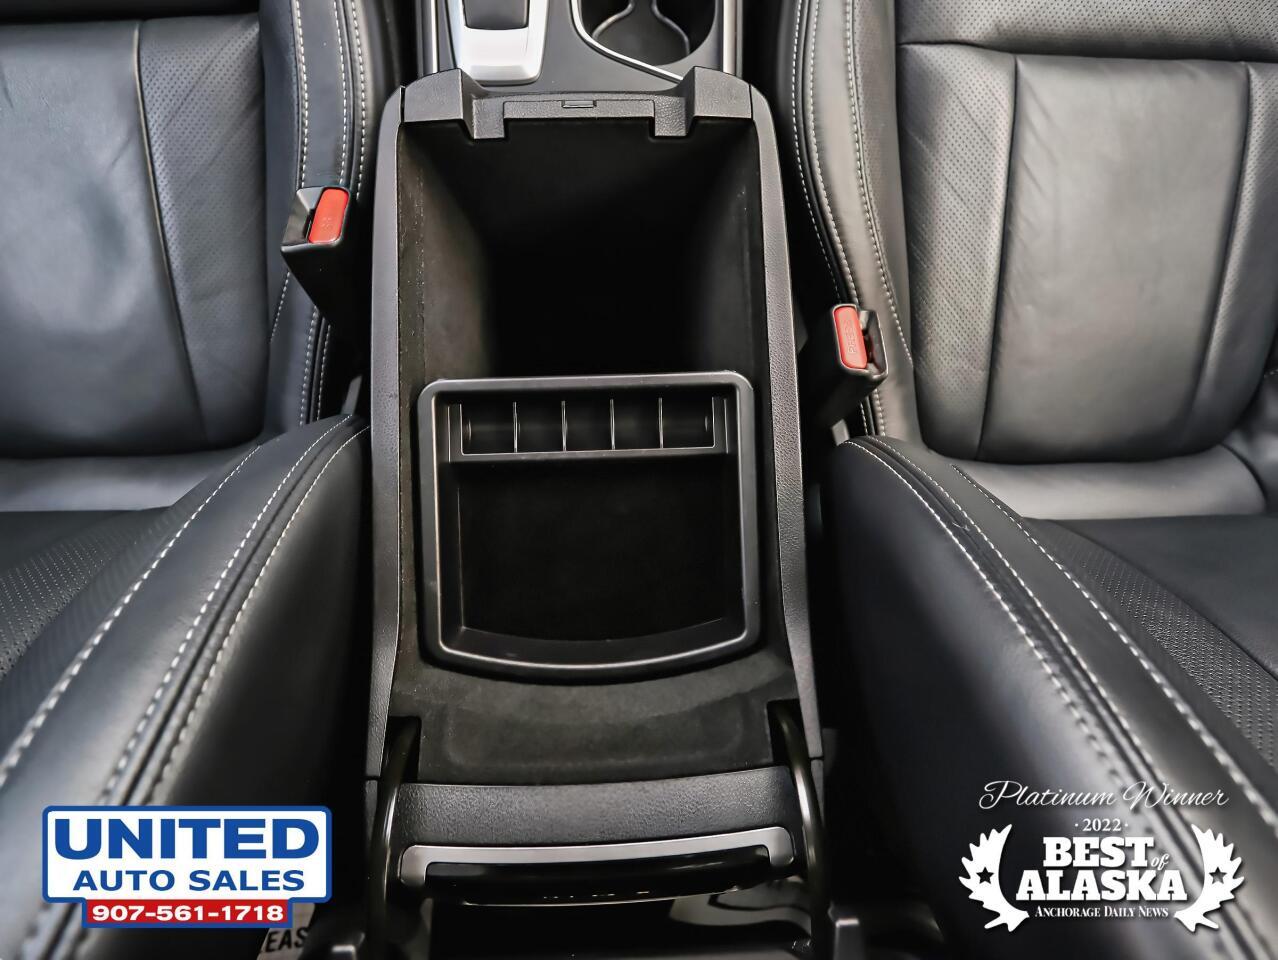 2019 Subaru Ascent Limited 7 Passenger AWD 4dr SUV 87